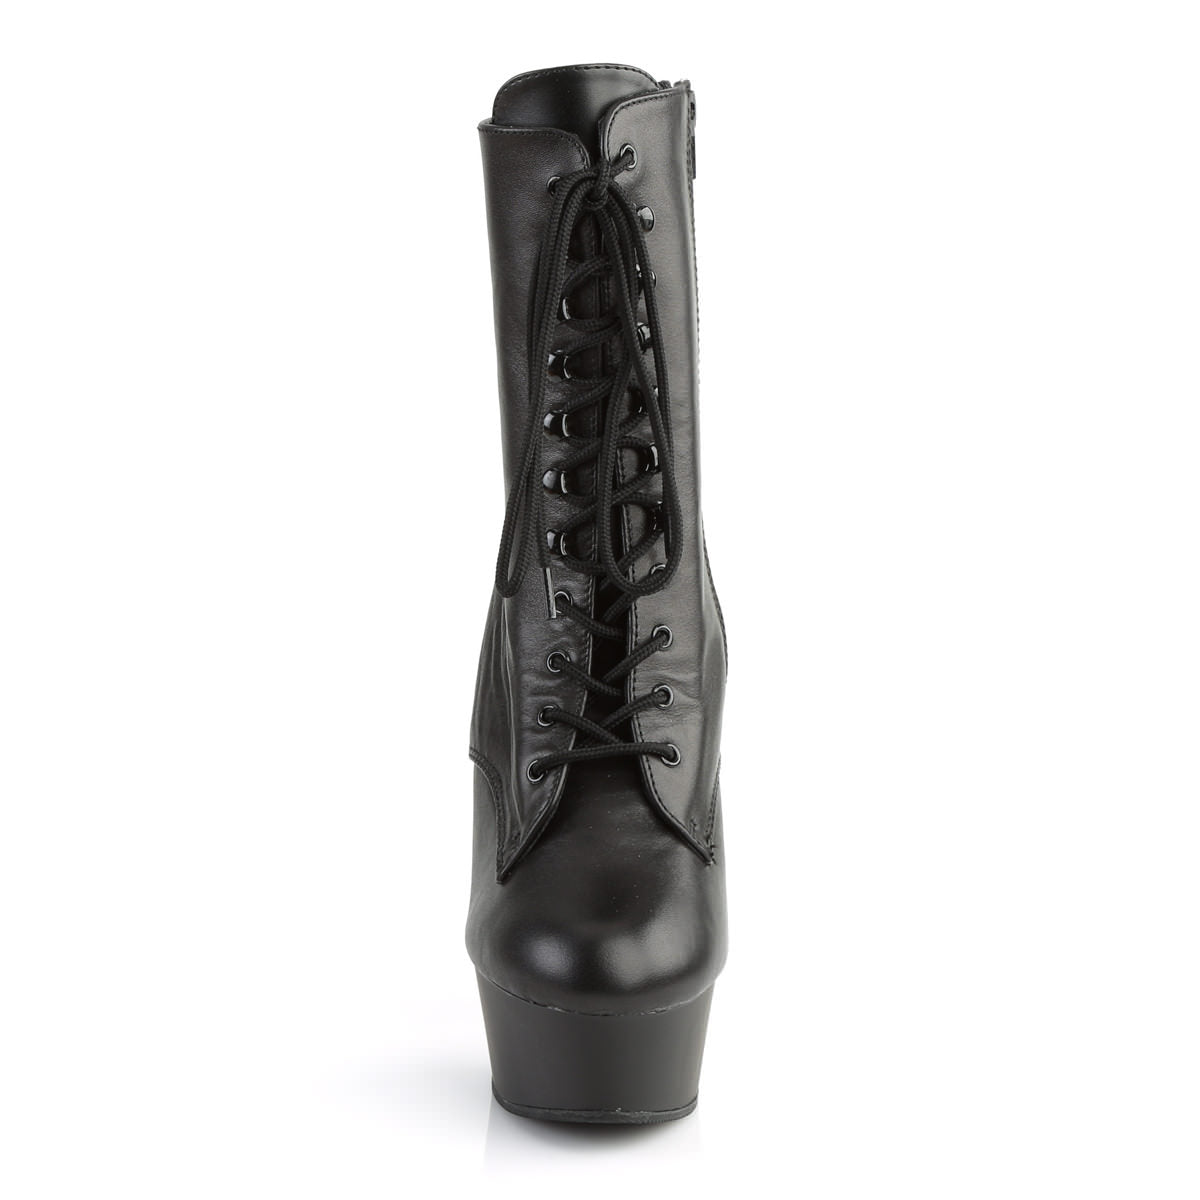 6 Inch Heel DELIGHT-1020 Black Leather